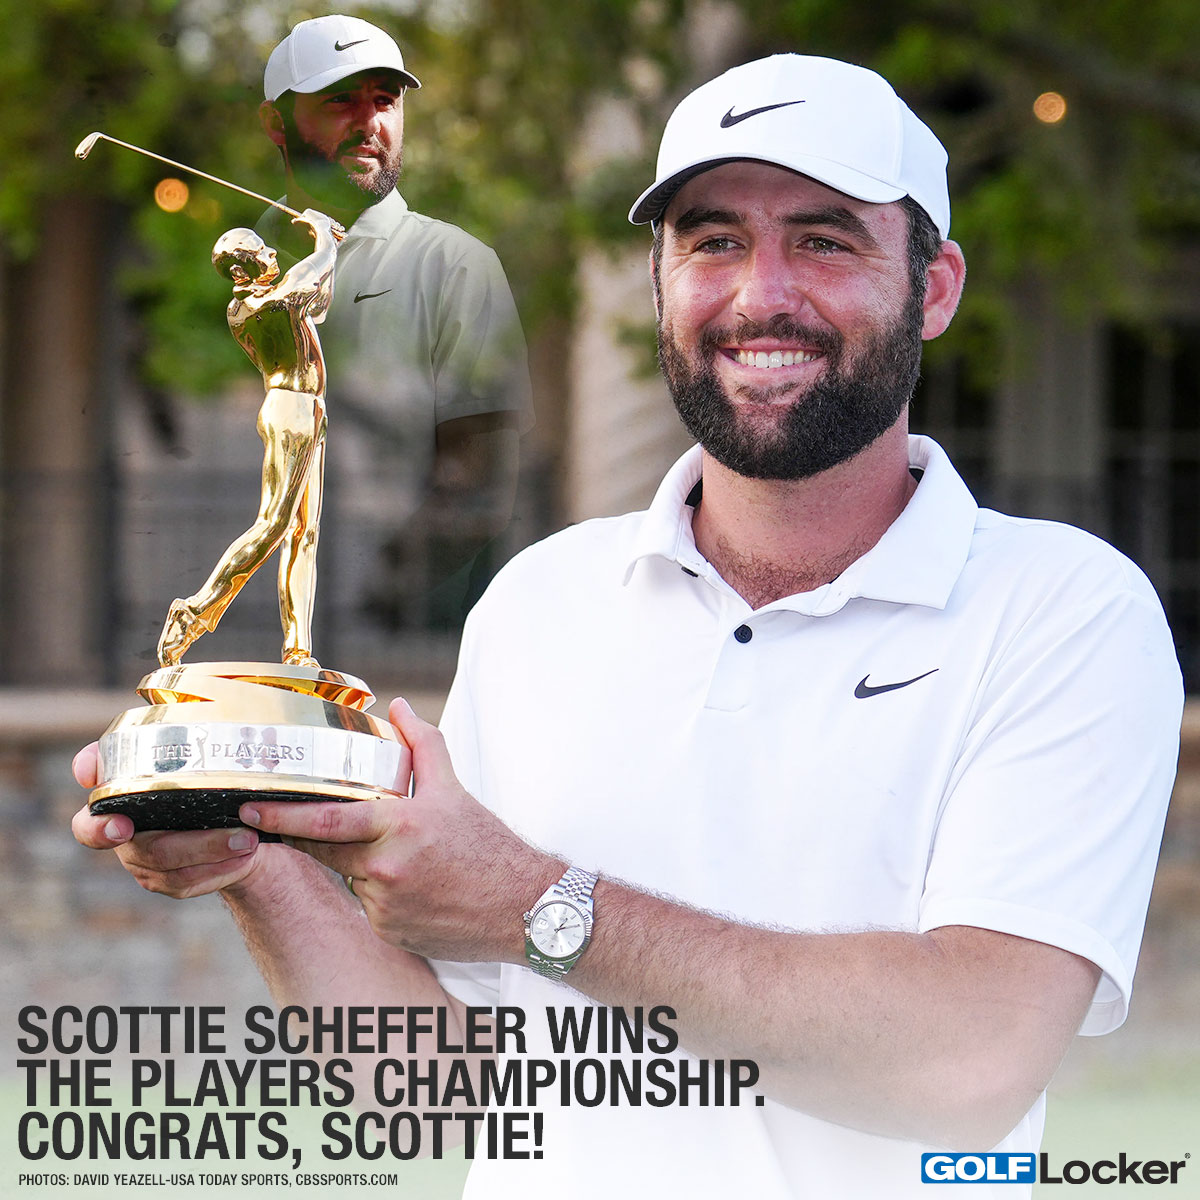 Scottie Scheffler Wins THE PLAYERS Championship. Congrats, Scottie!